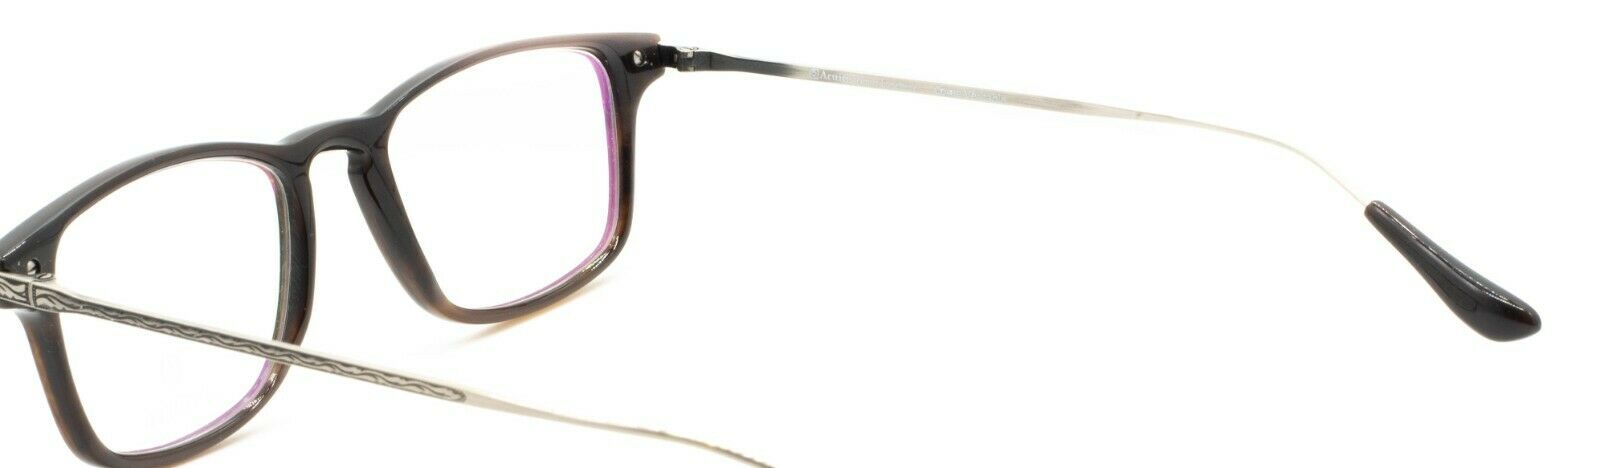 ACUITIS GA47-ORVAL 5/5 50mm Glasses RX Optical Eyeglasses Eyewear New - TRUSTED